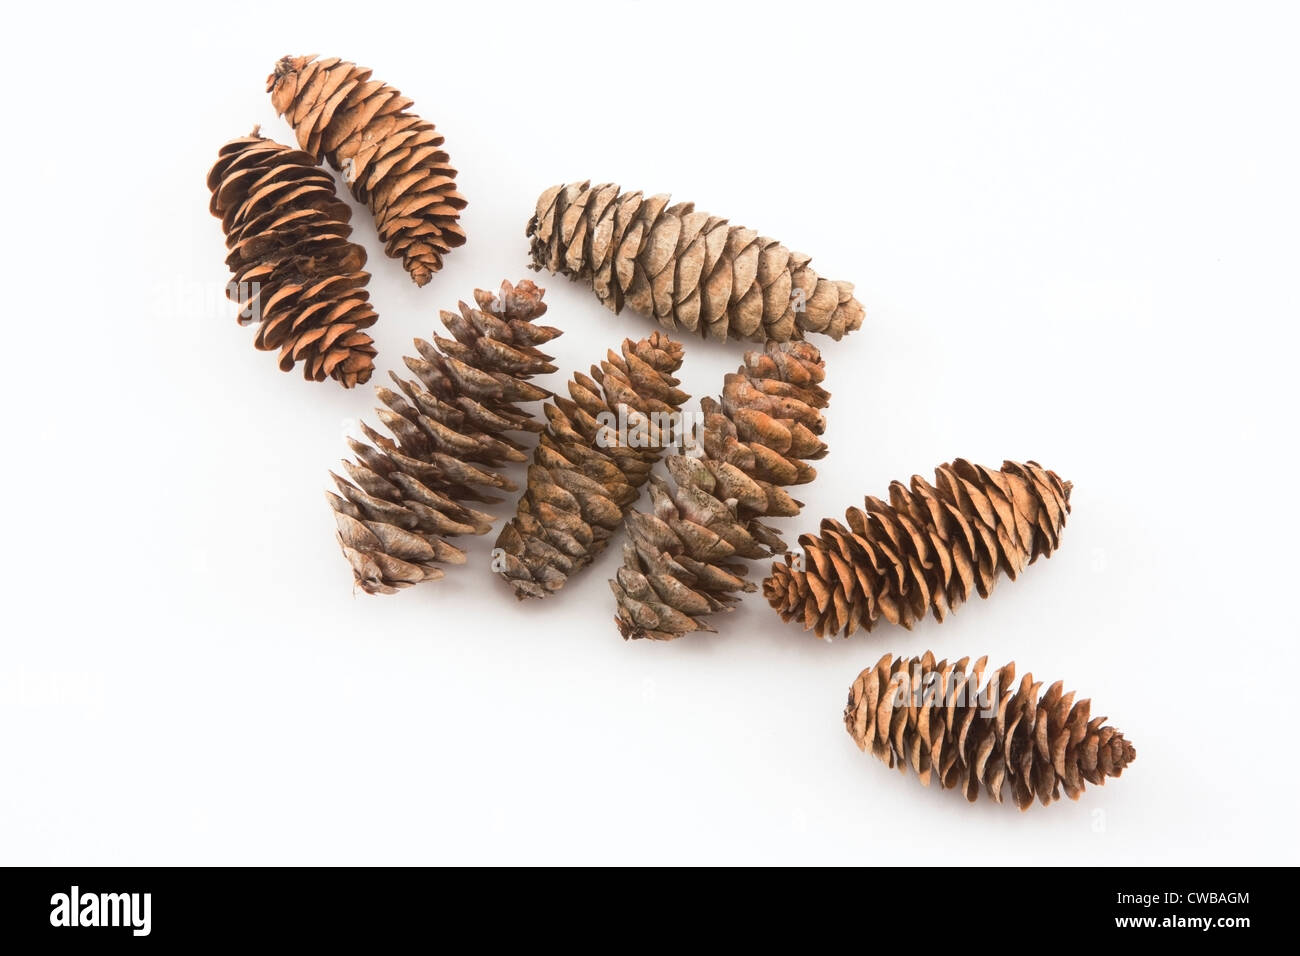 Pine cones on white background. Stock Photo